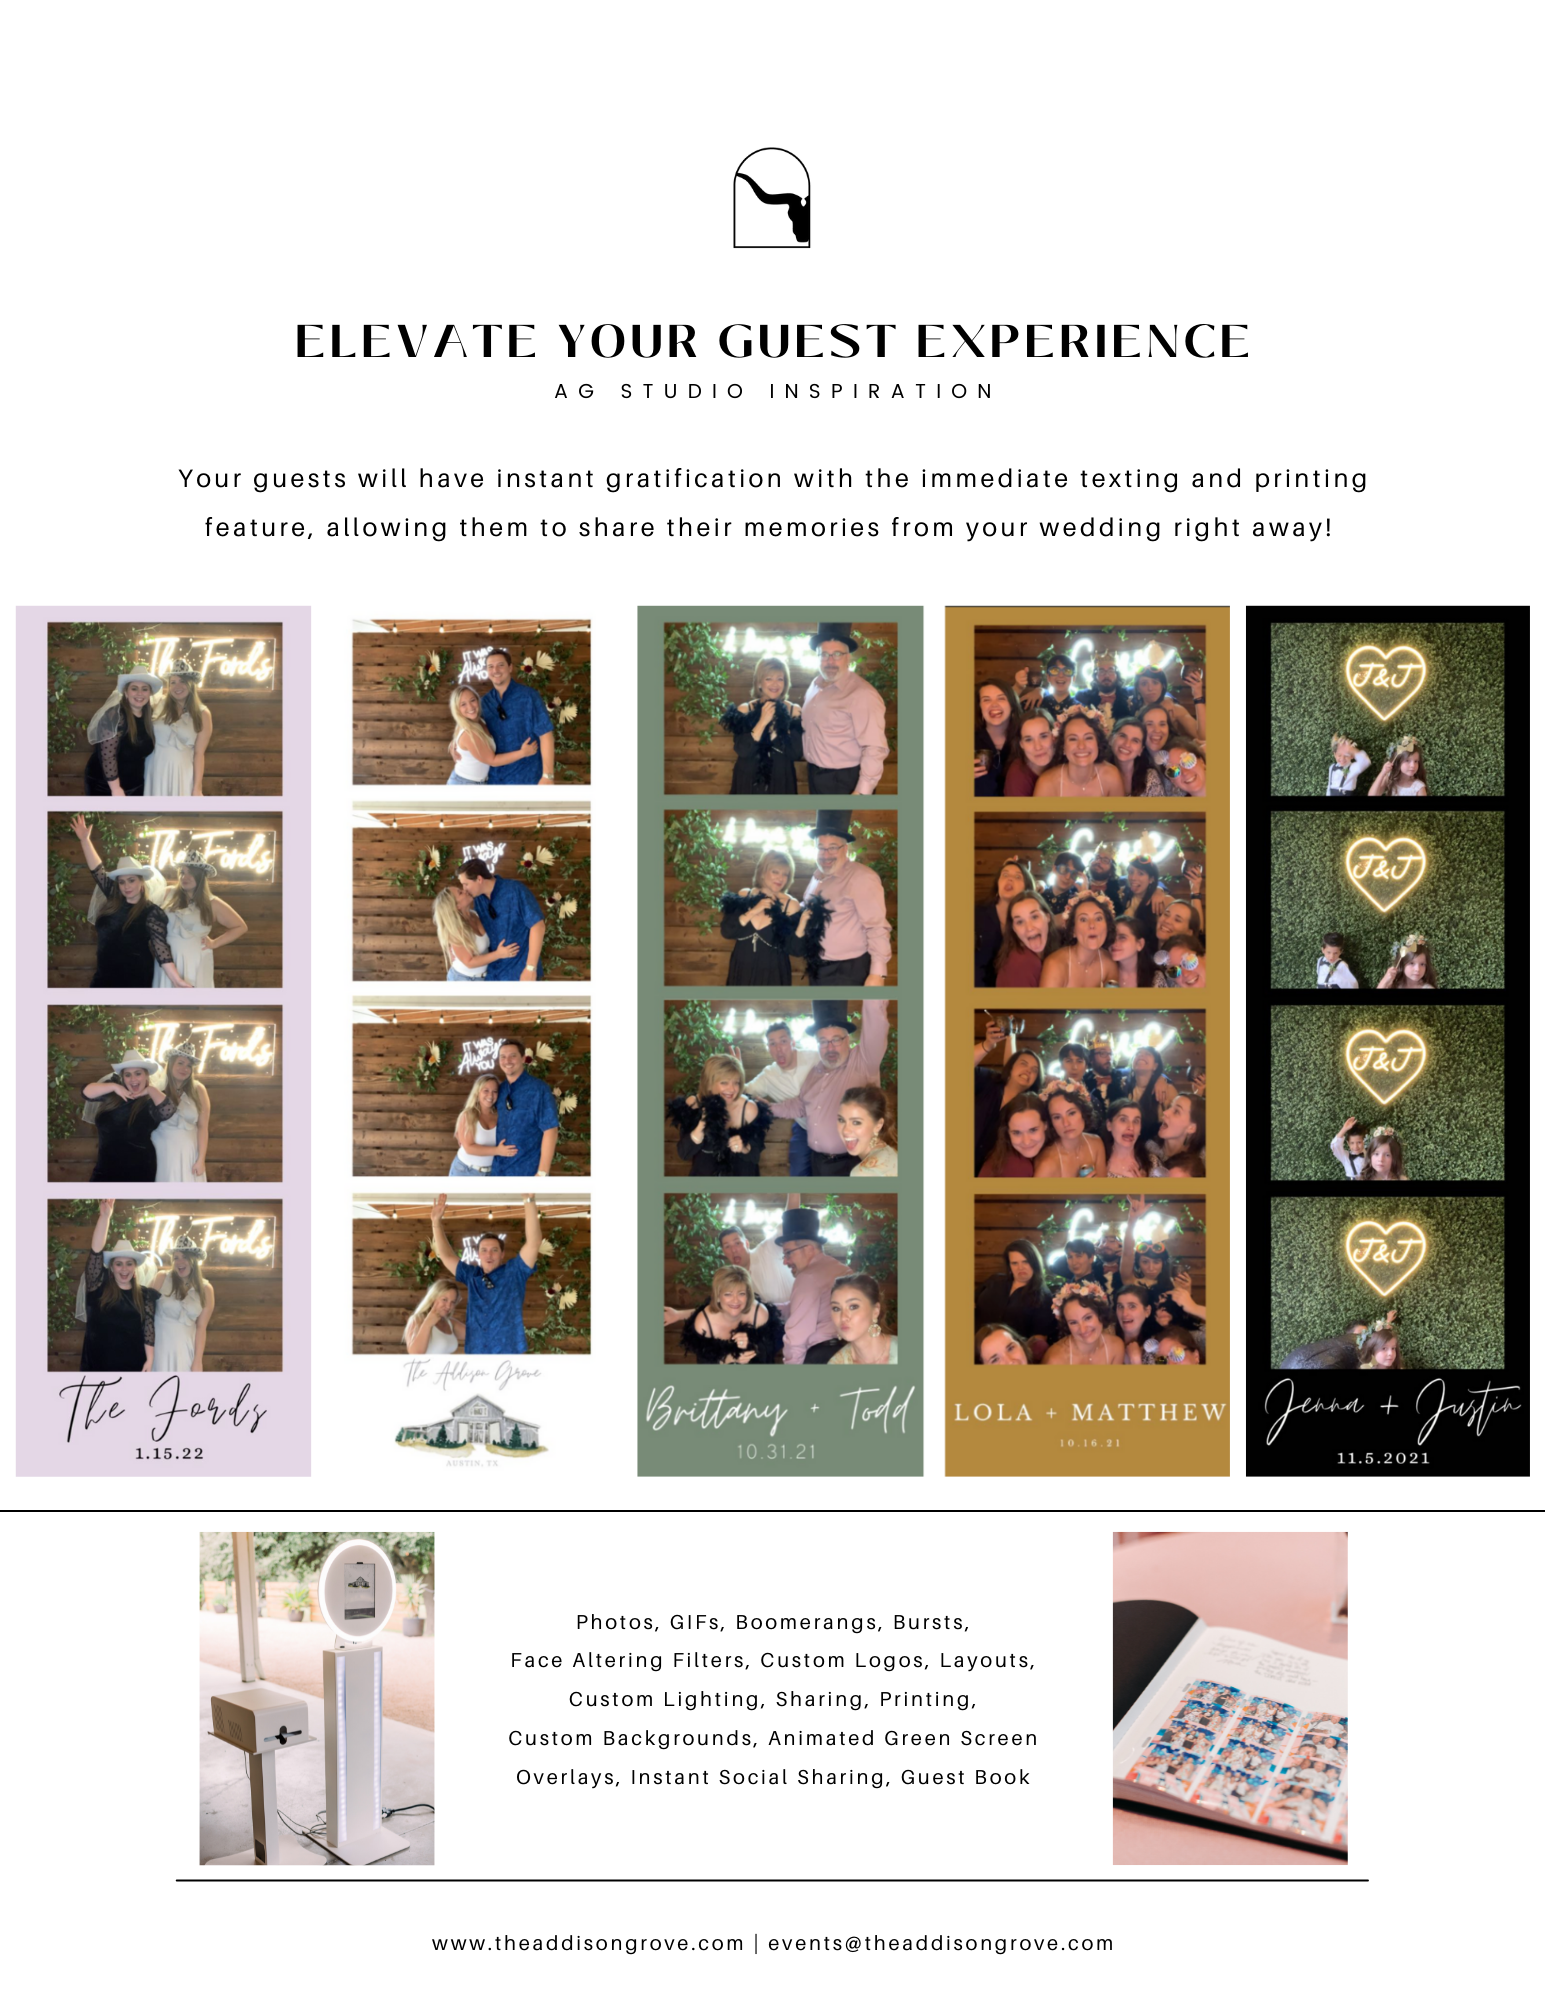 The Addison Grove AG Studio In-House Photobooth Enhancement Wedding Photobooth Vendor